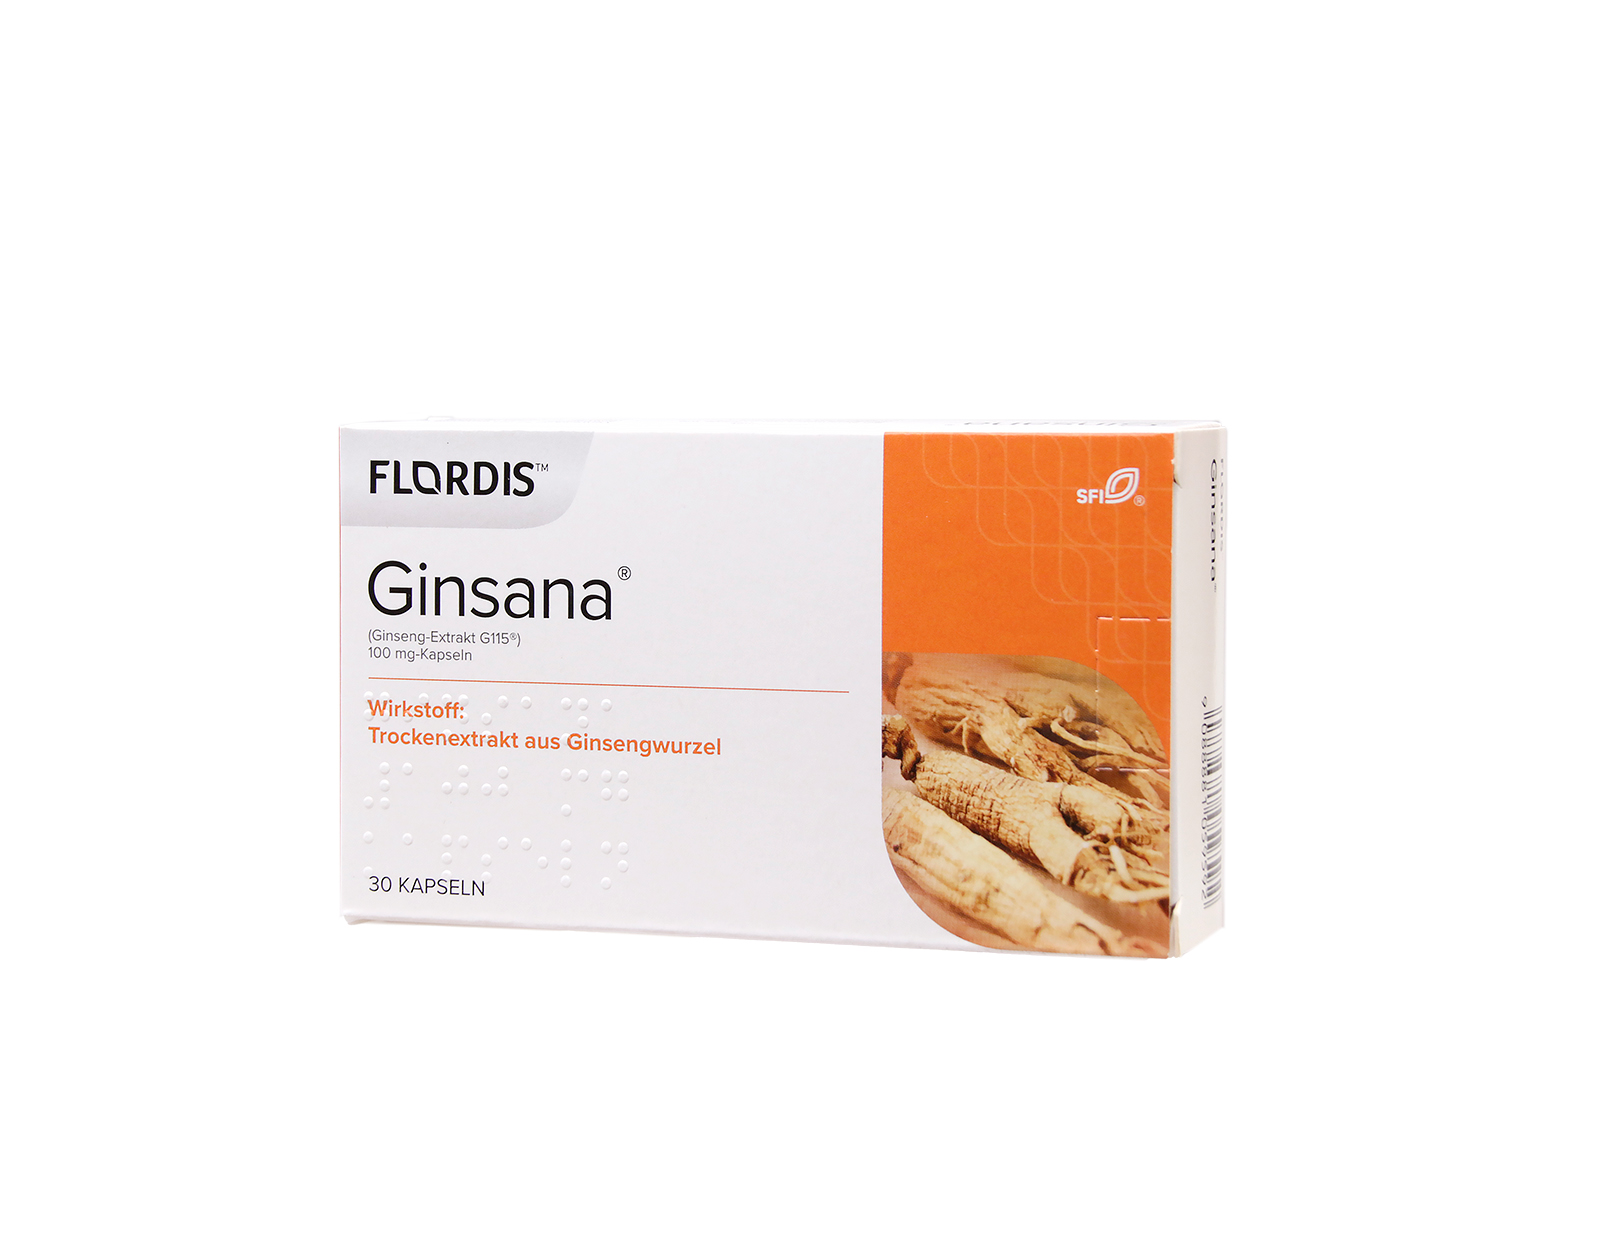 Ginsana (Ginseng-Extrakt G 115) 100 mg - Kapseln